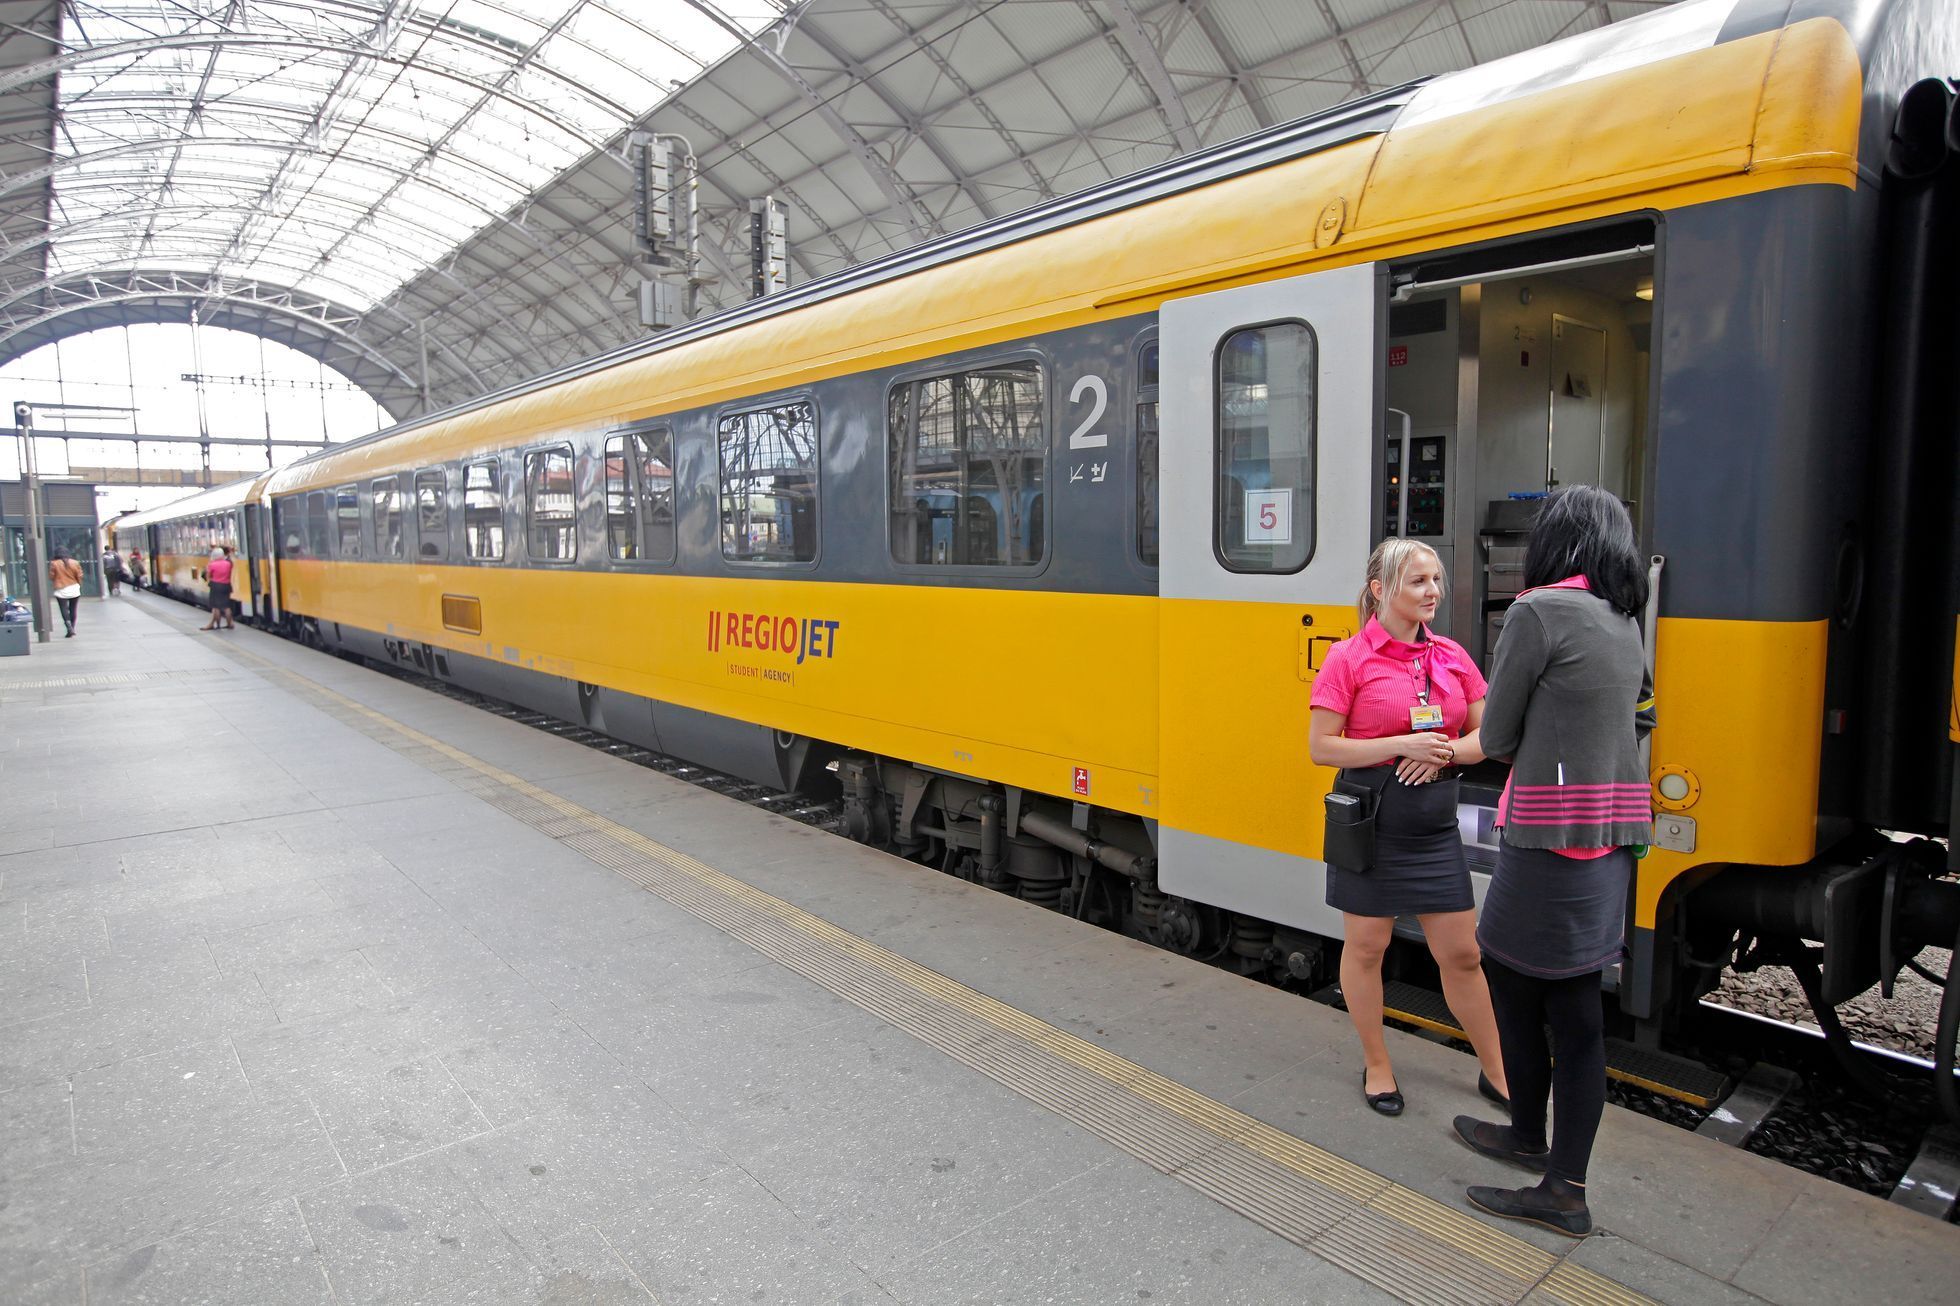 ilustrační fotografie, vlak, RegioJet, Praha, 2017